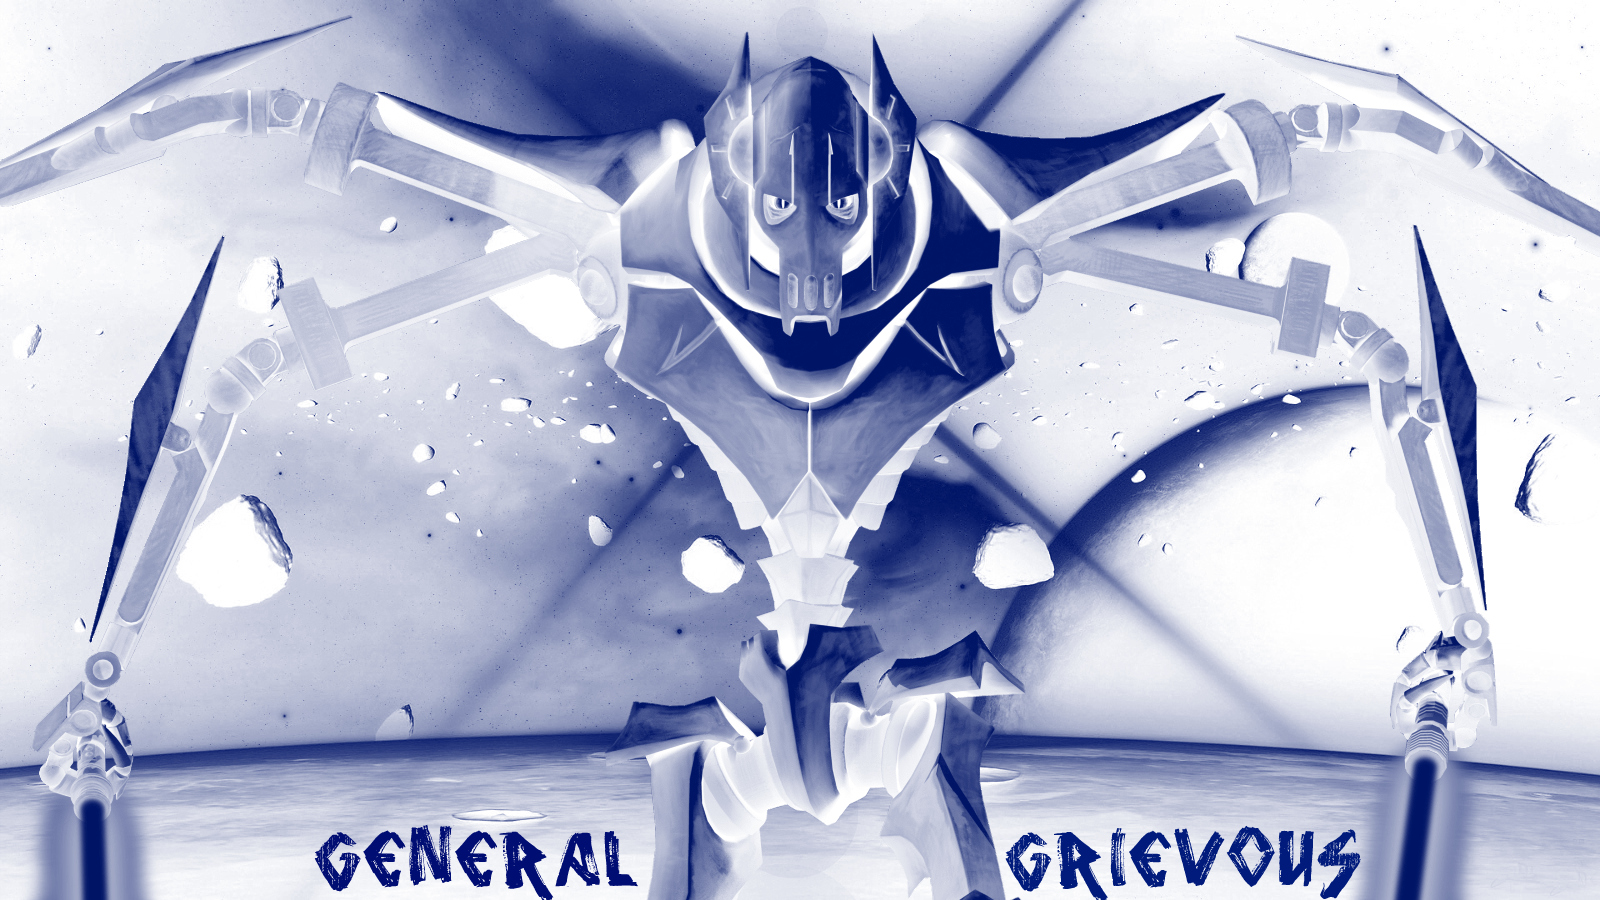 General Grievous Wallpaper The Star Wars Underworld